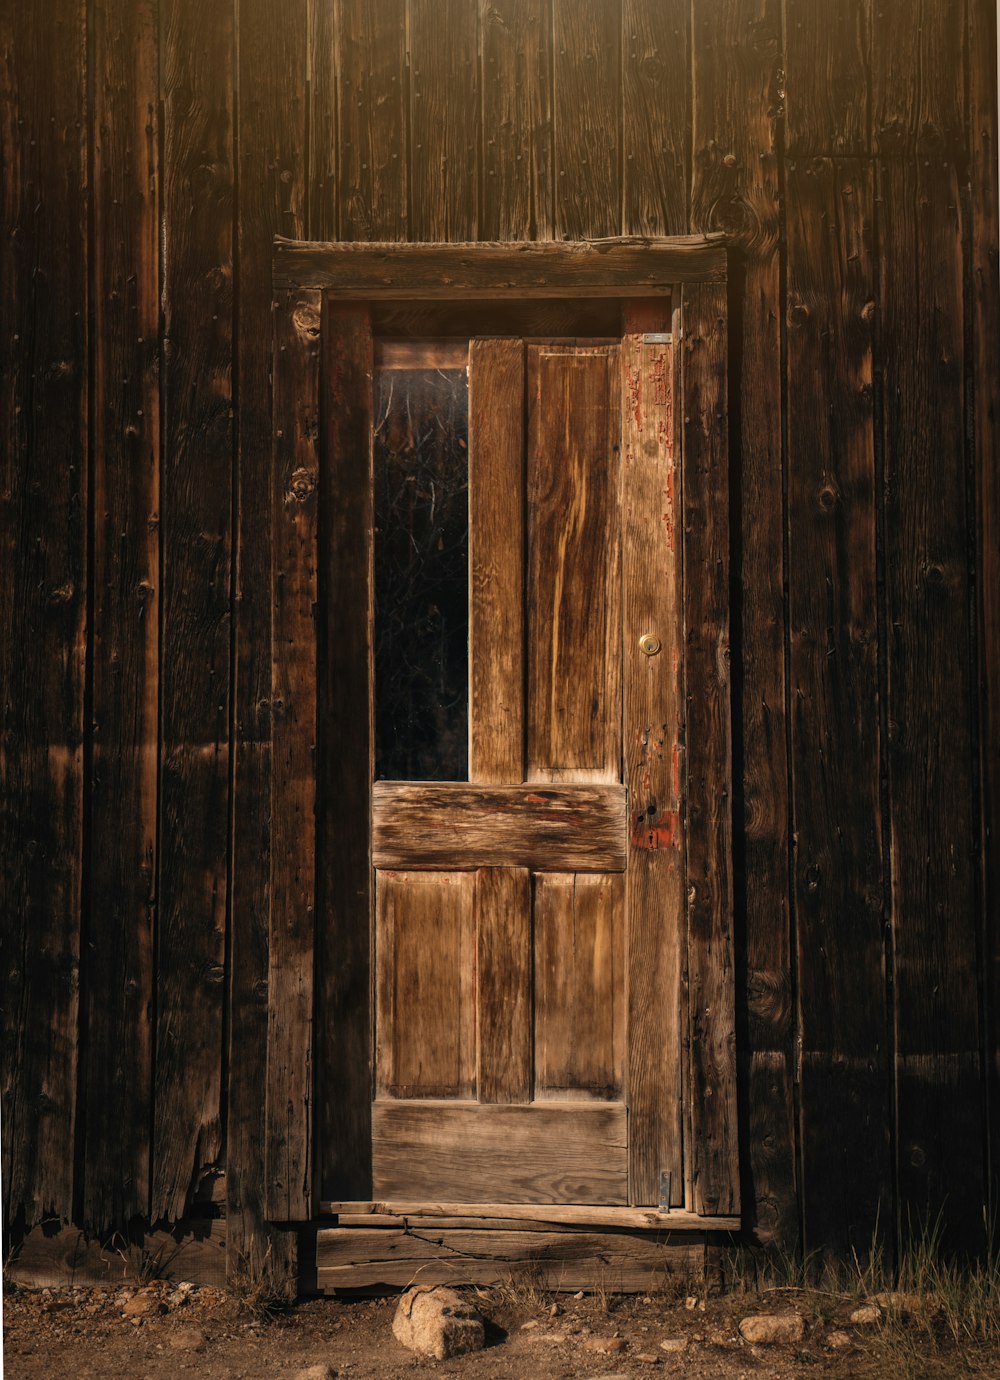 a wooden door in a wooden wall